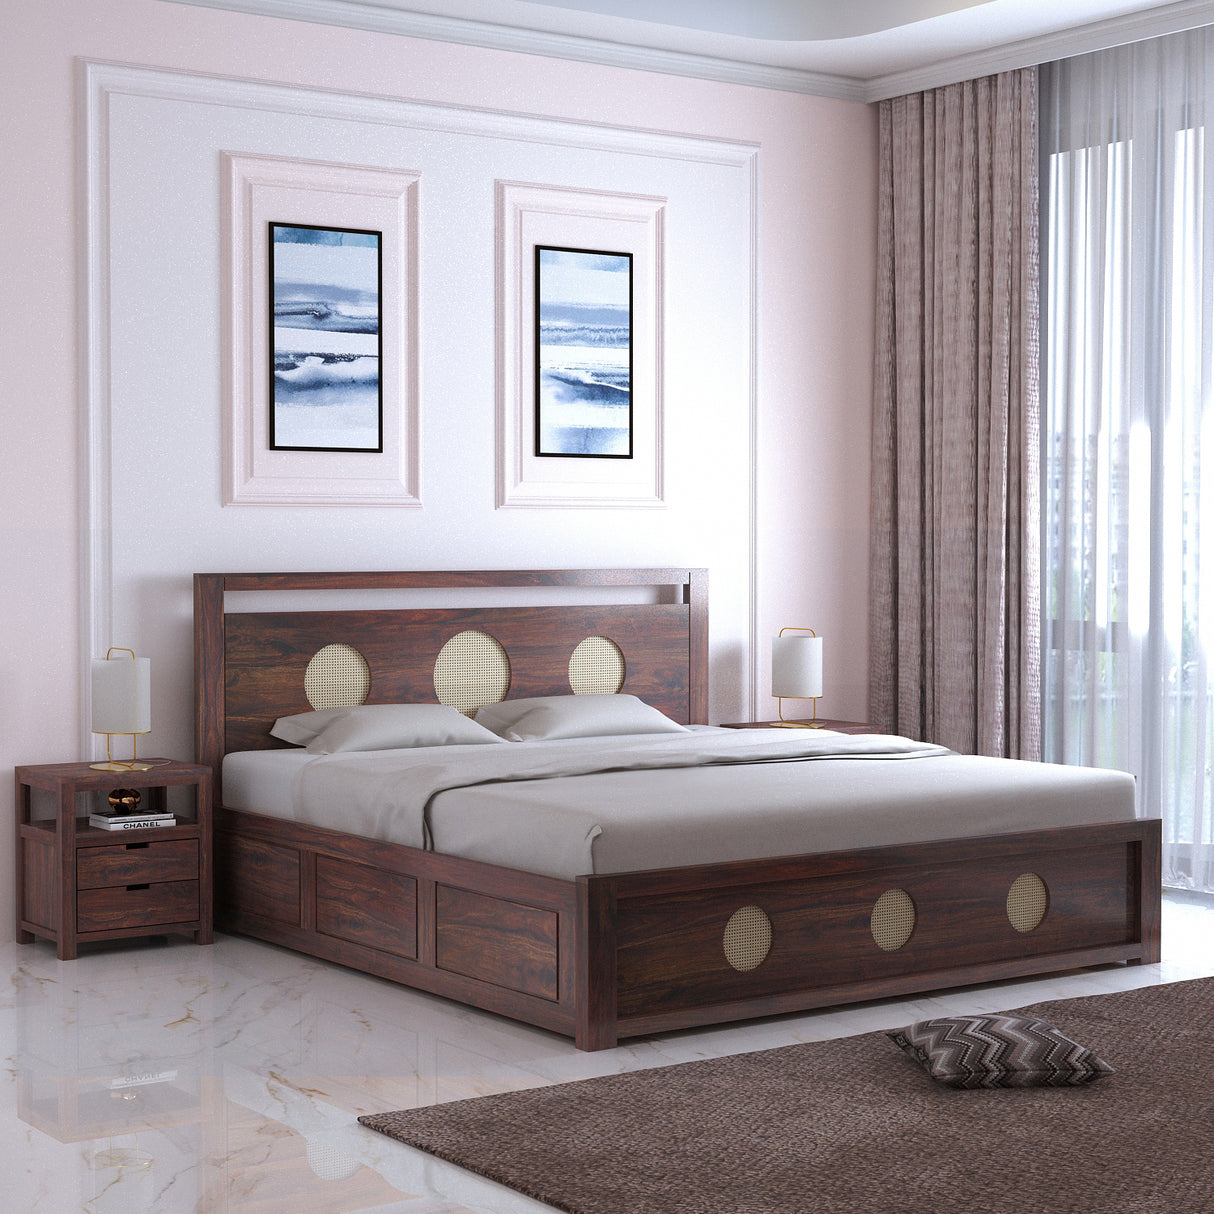 Cosmos Solid Sheesham Wood Bed With Box Storage - 1 Year Warranty